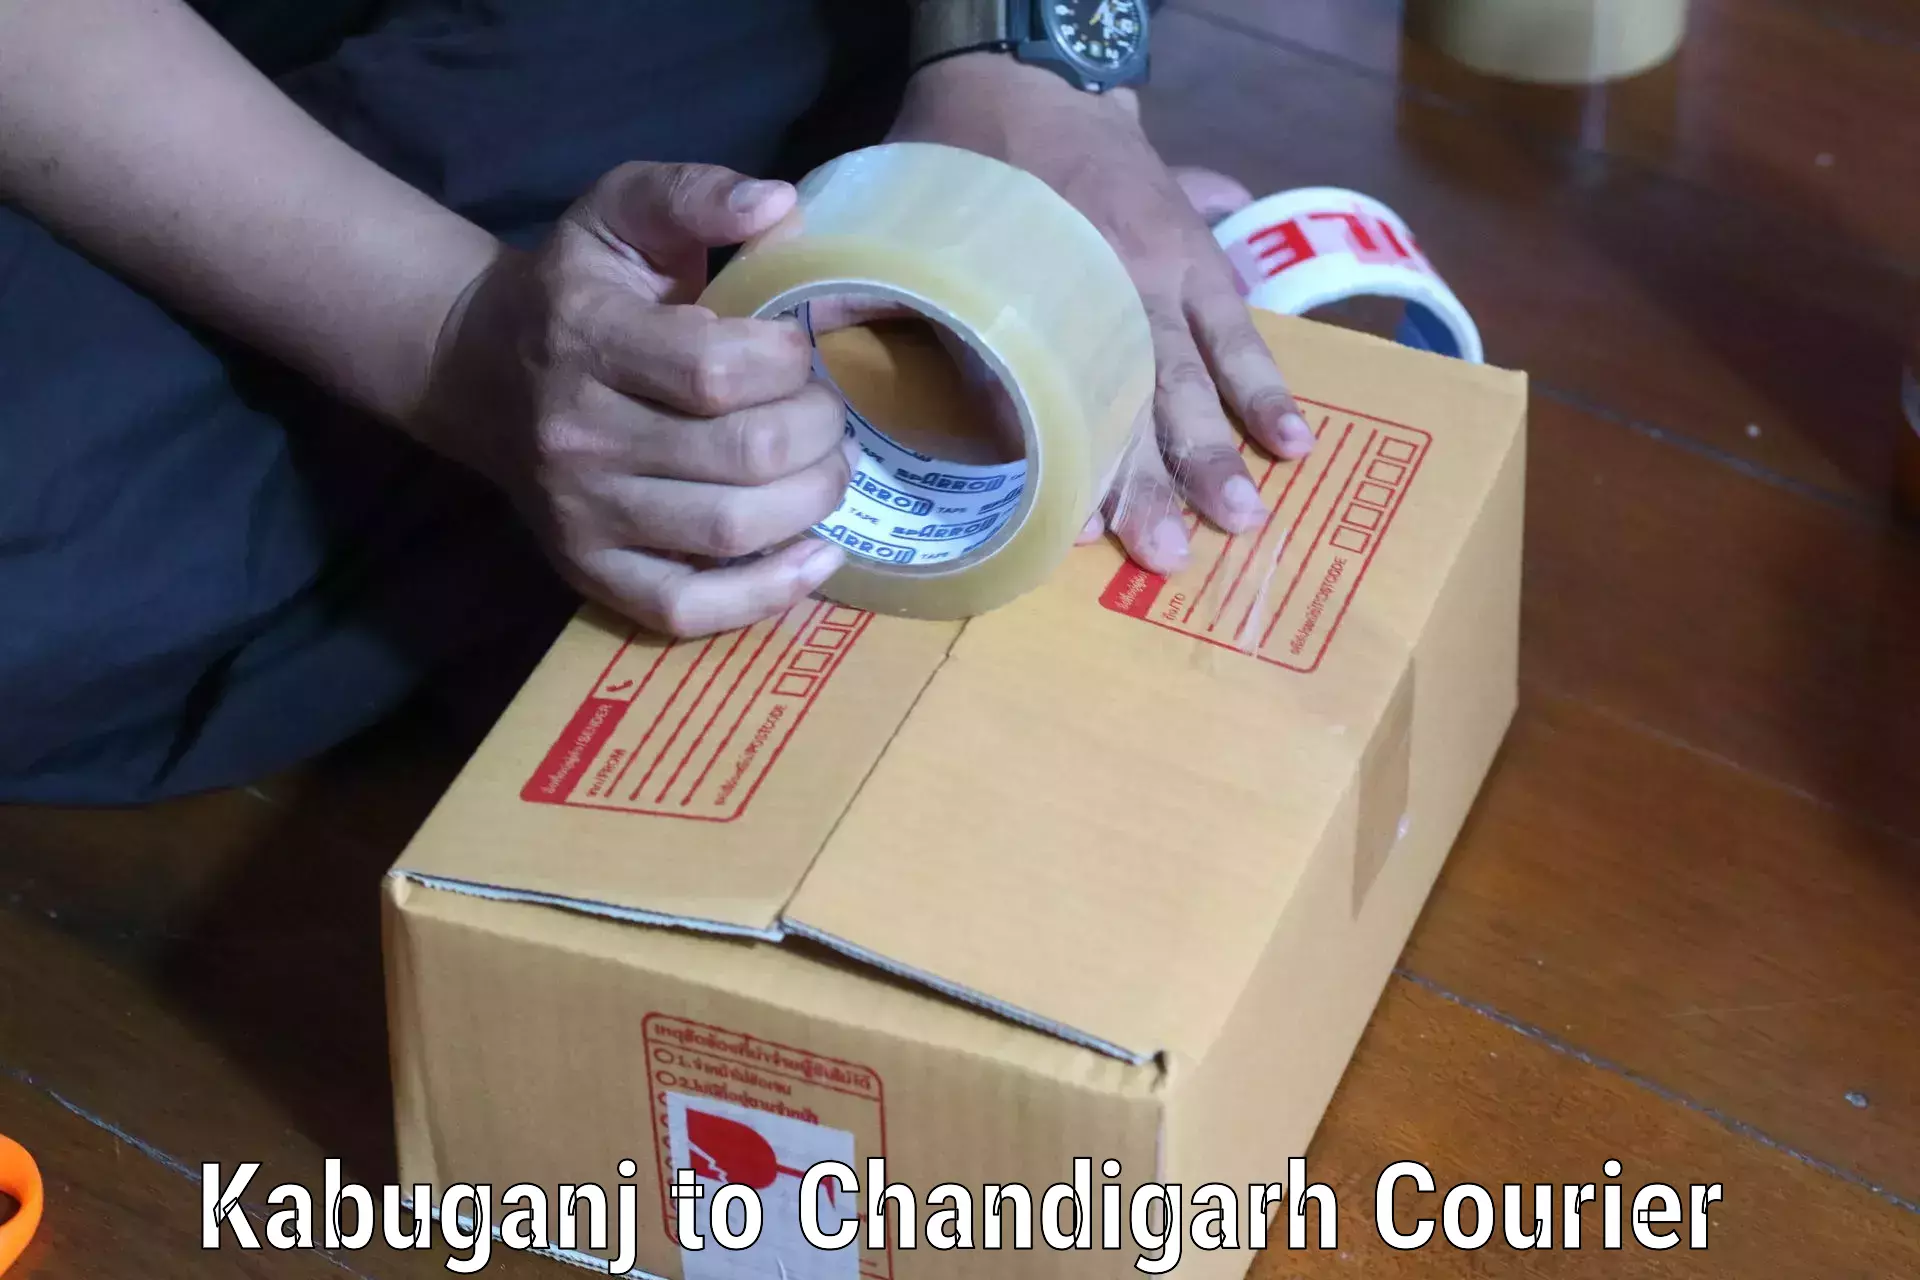 Efficient cargo handling Kabuganj to Chandigarh